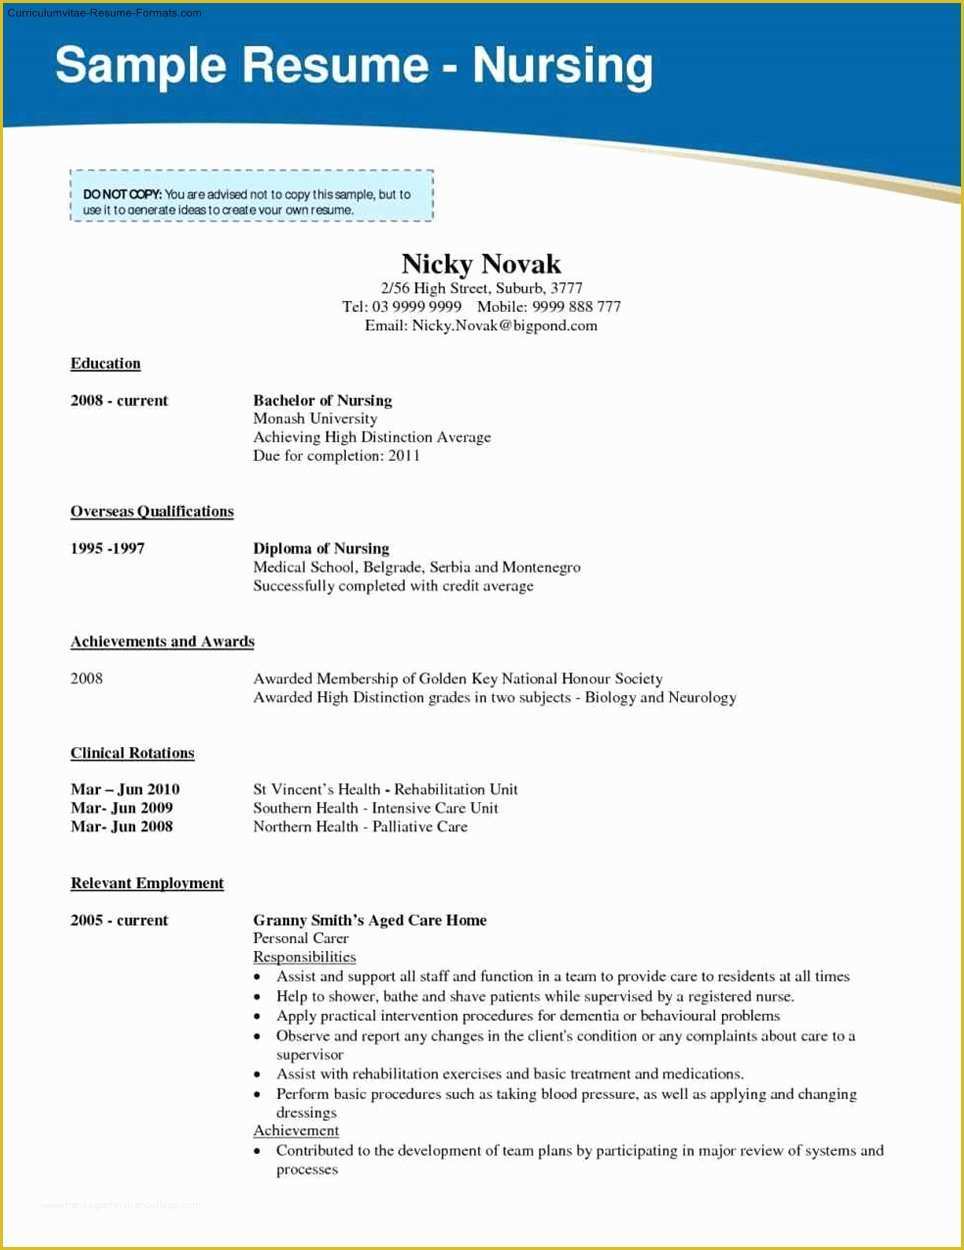 Free Nursing Resume Templates Of Nursing School Resume Template Free Samples Examples